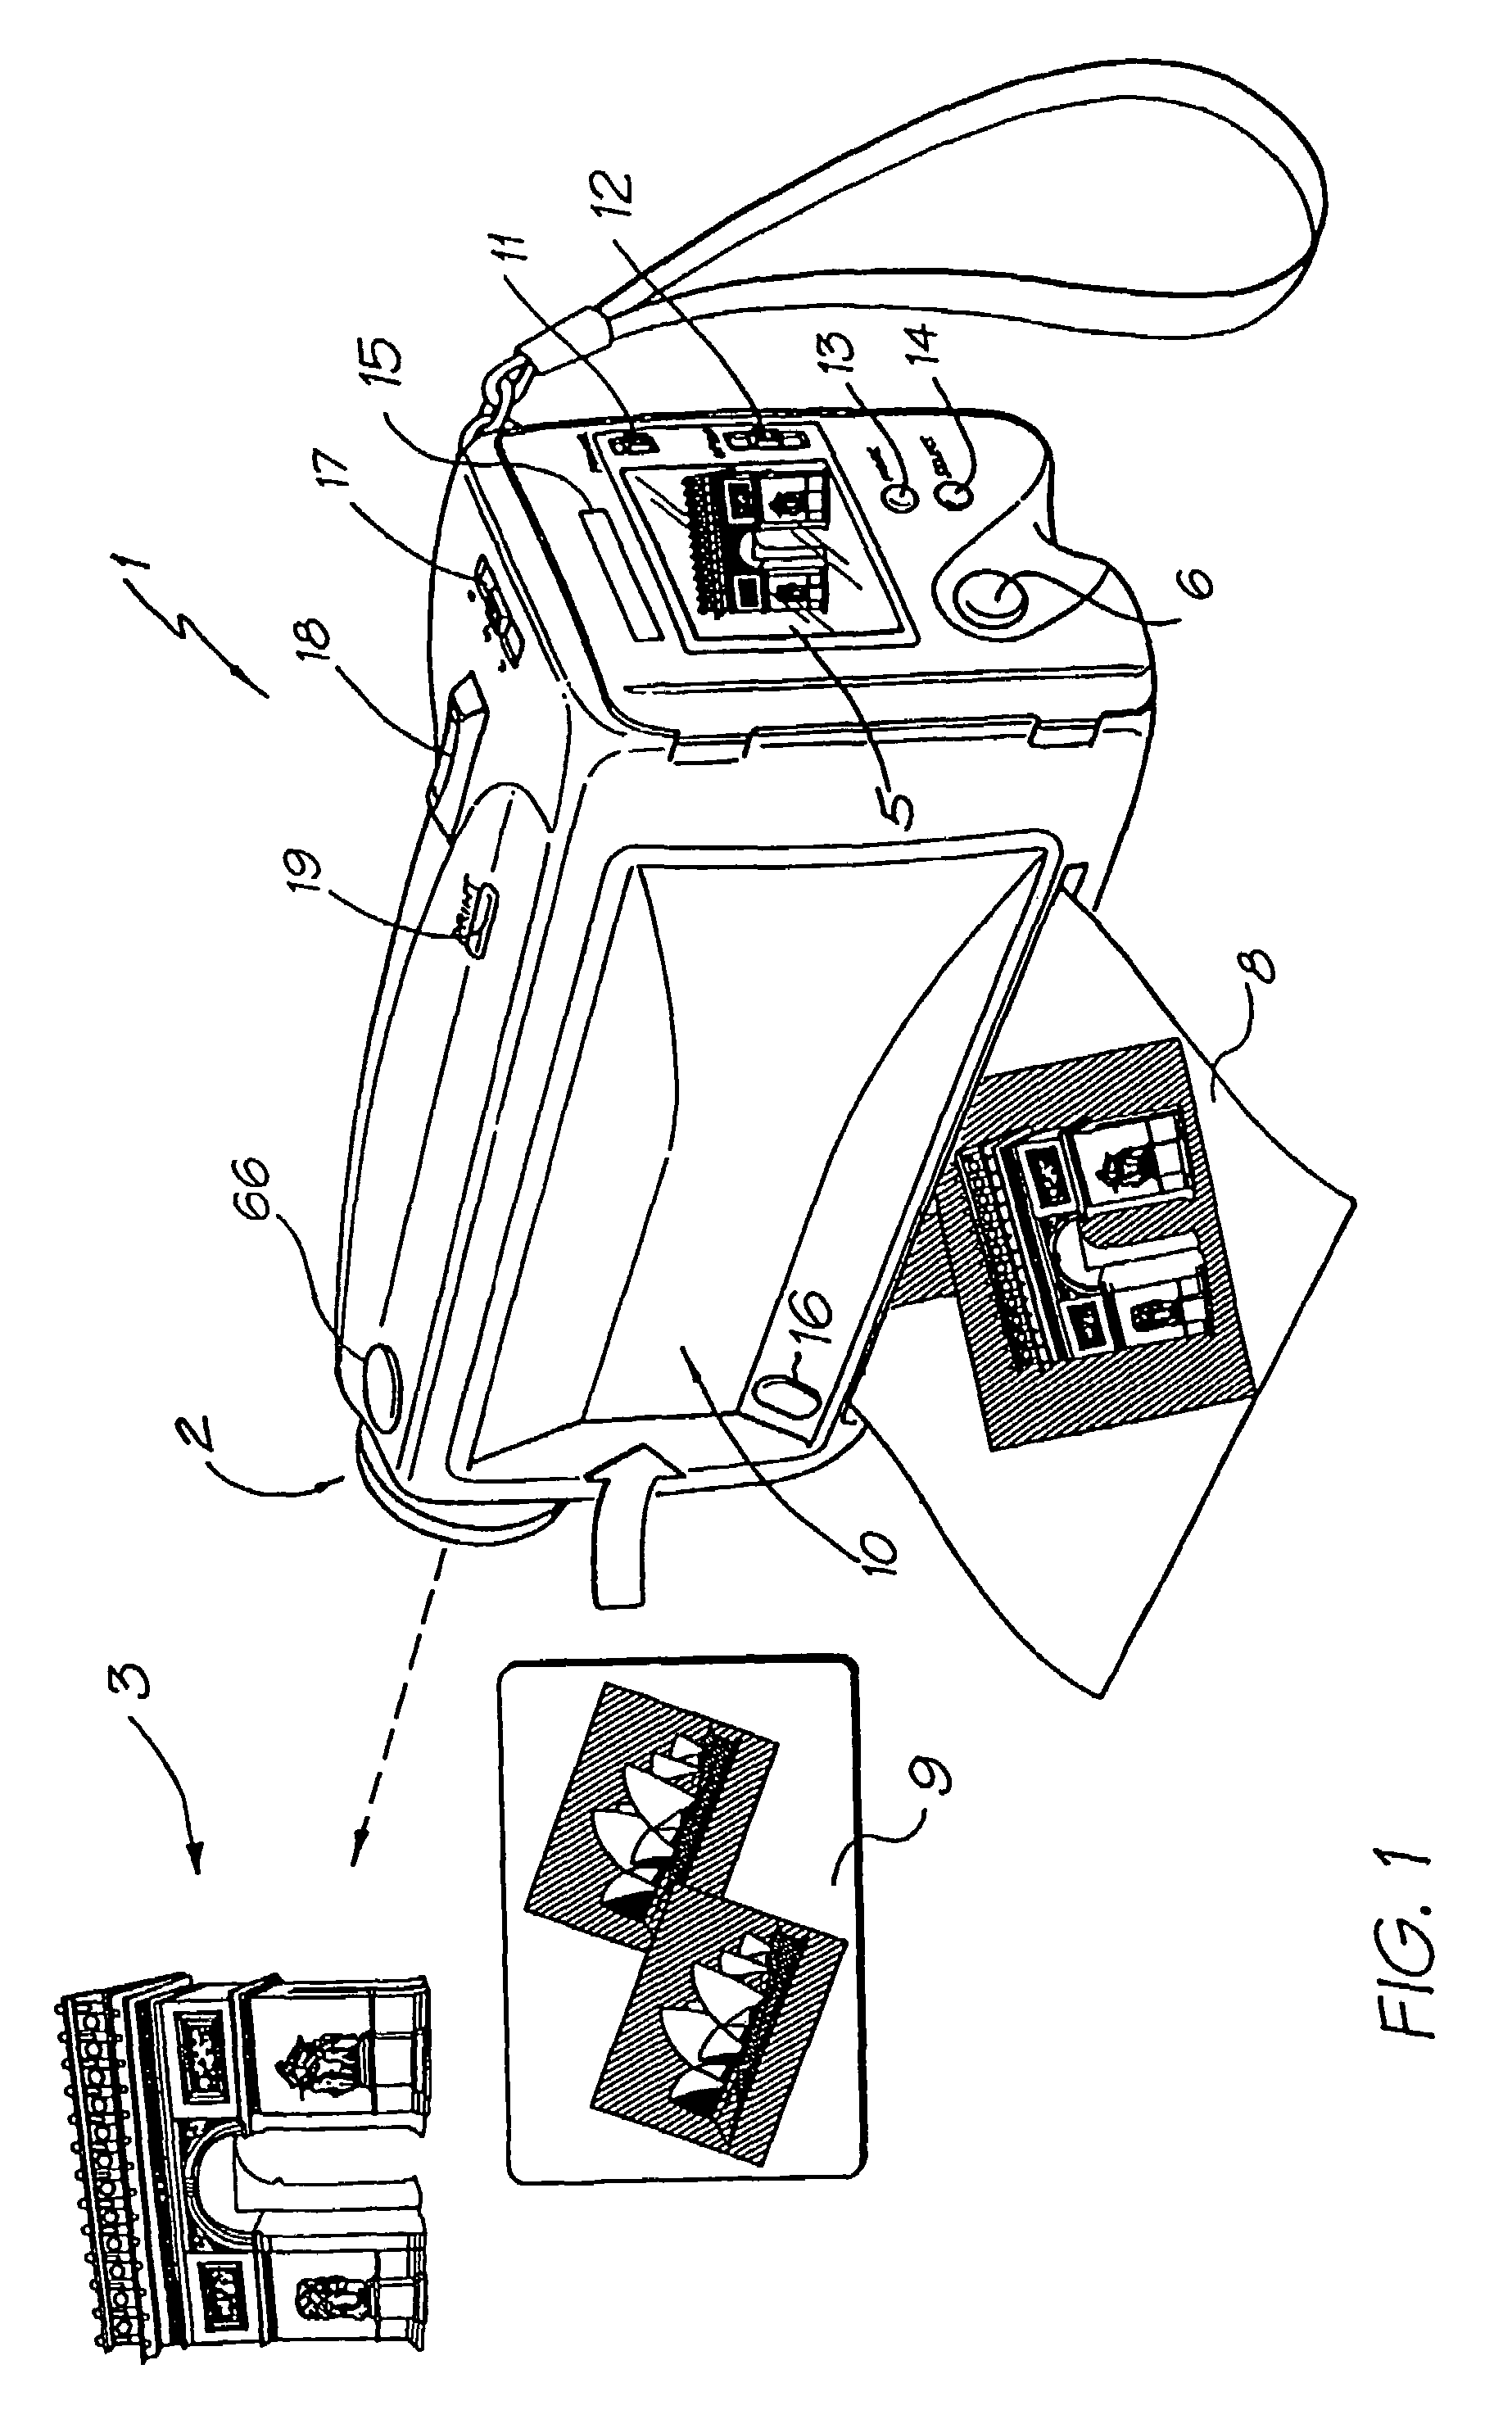 Image sensing apparatus including a microcontroller